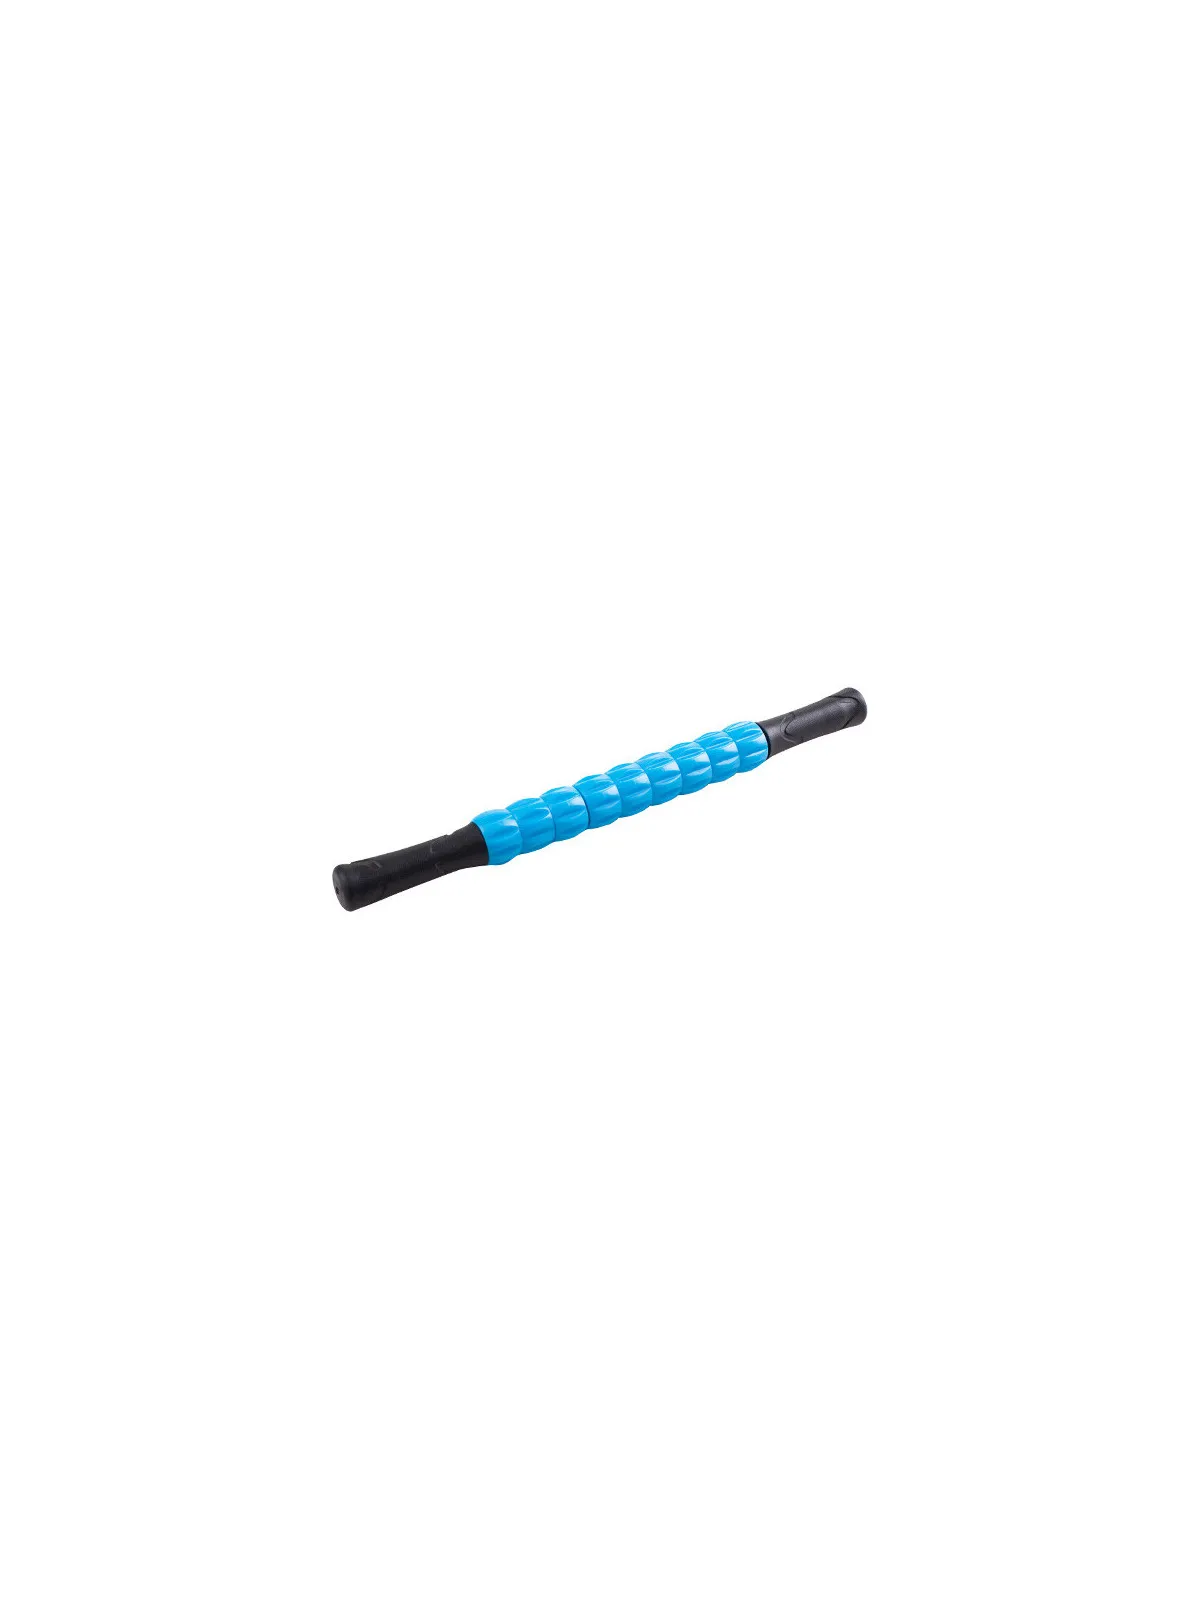 Roller do masażu niebieski - MASSAGE ROLLER M1 43 cm 03 Blue